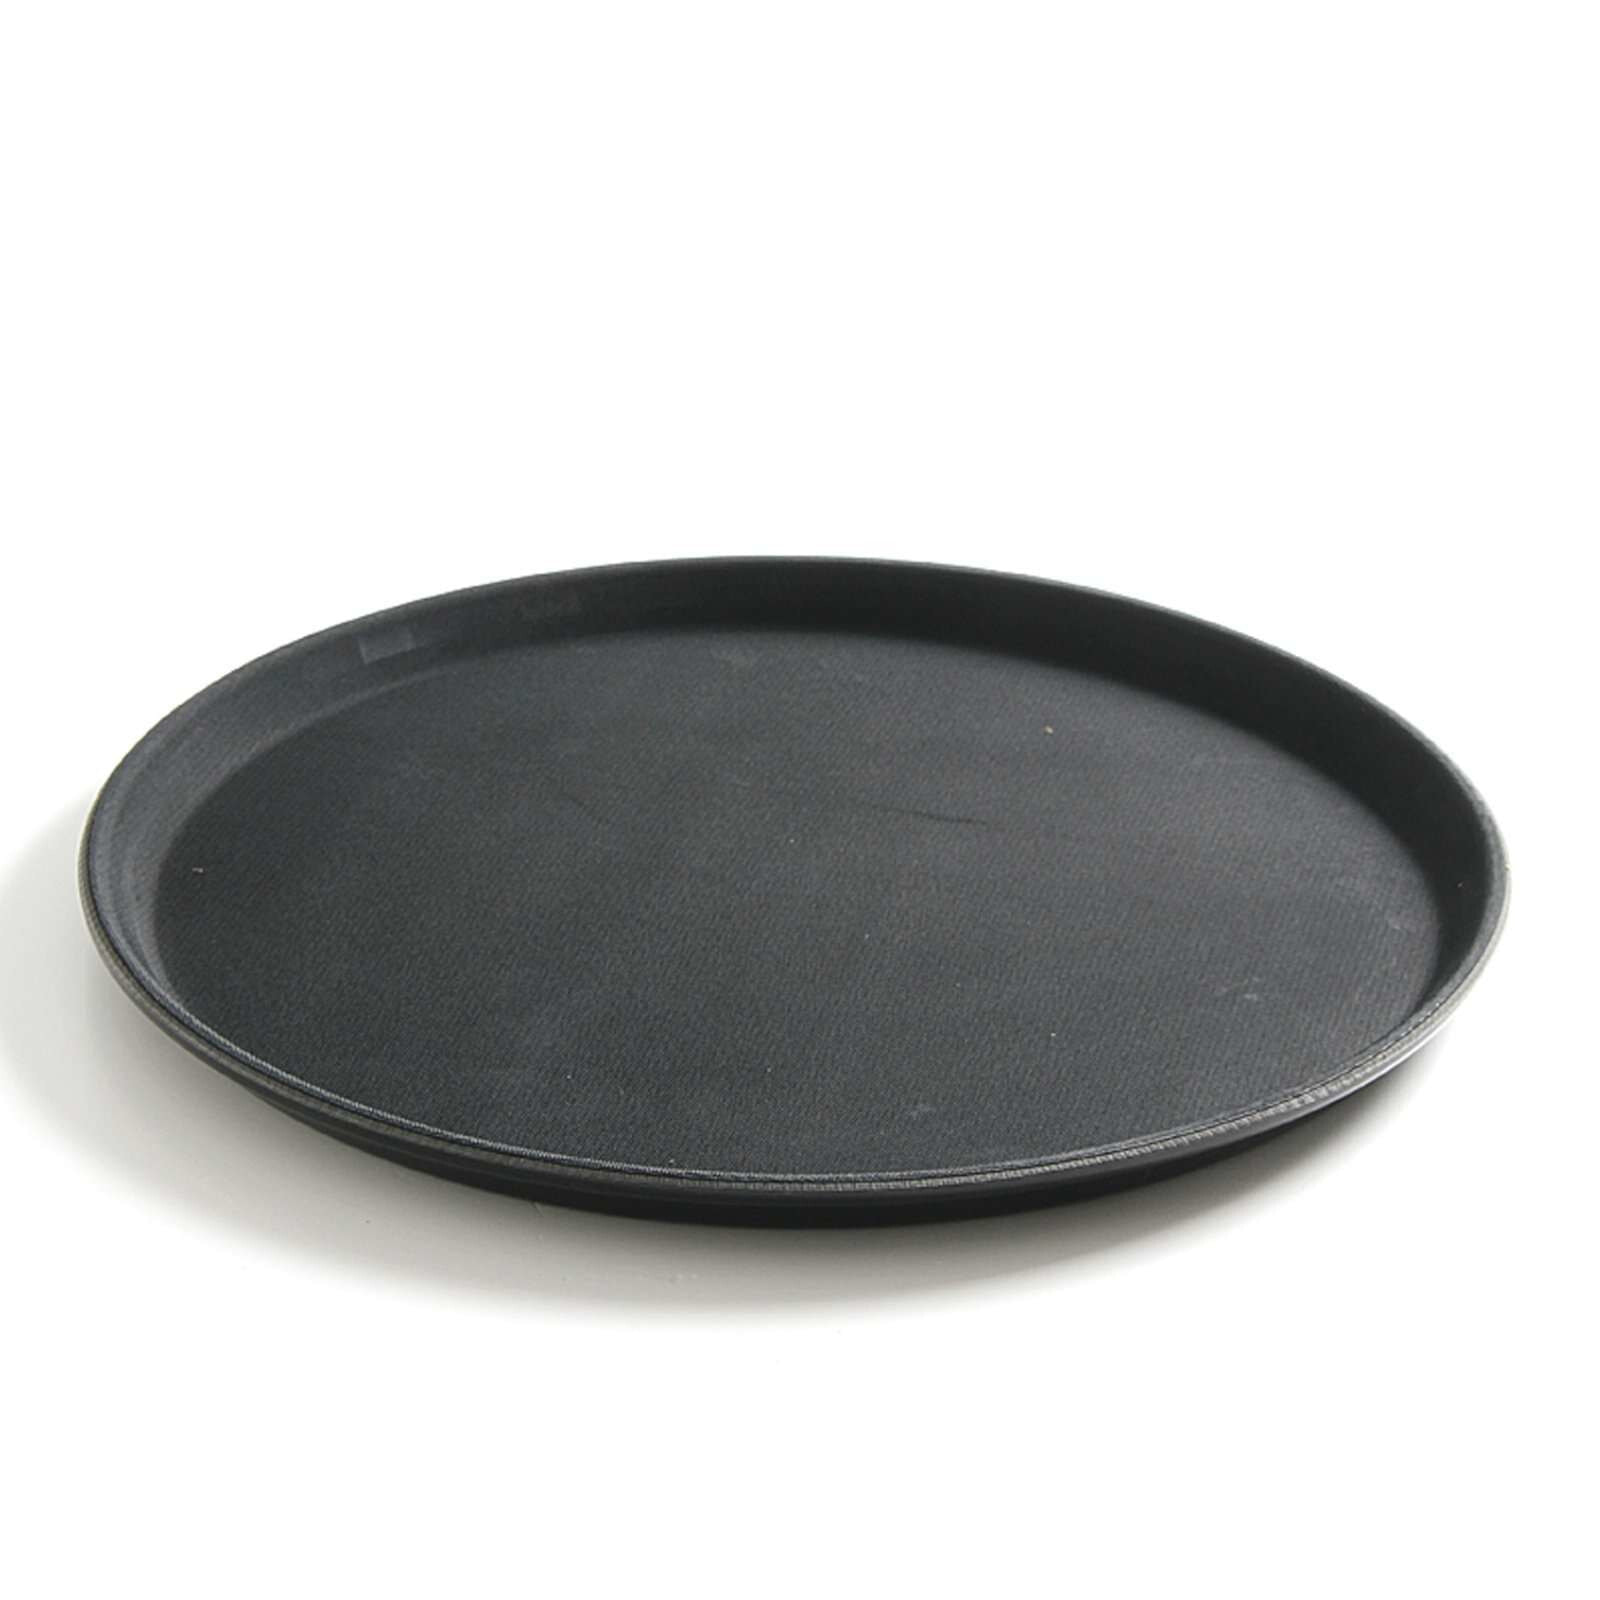 Non-slip waiter's tray, resistant round, diam. 36cm - black